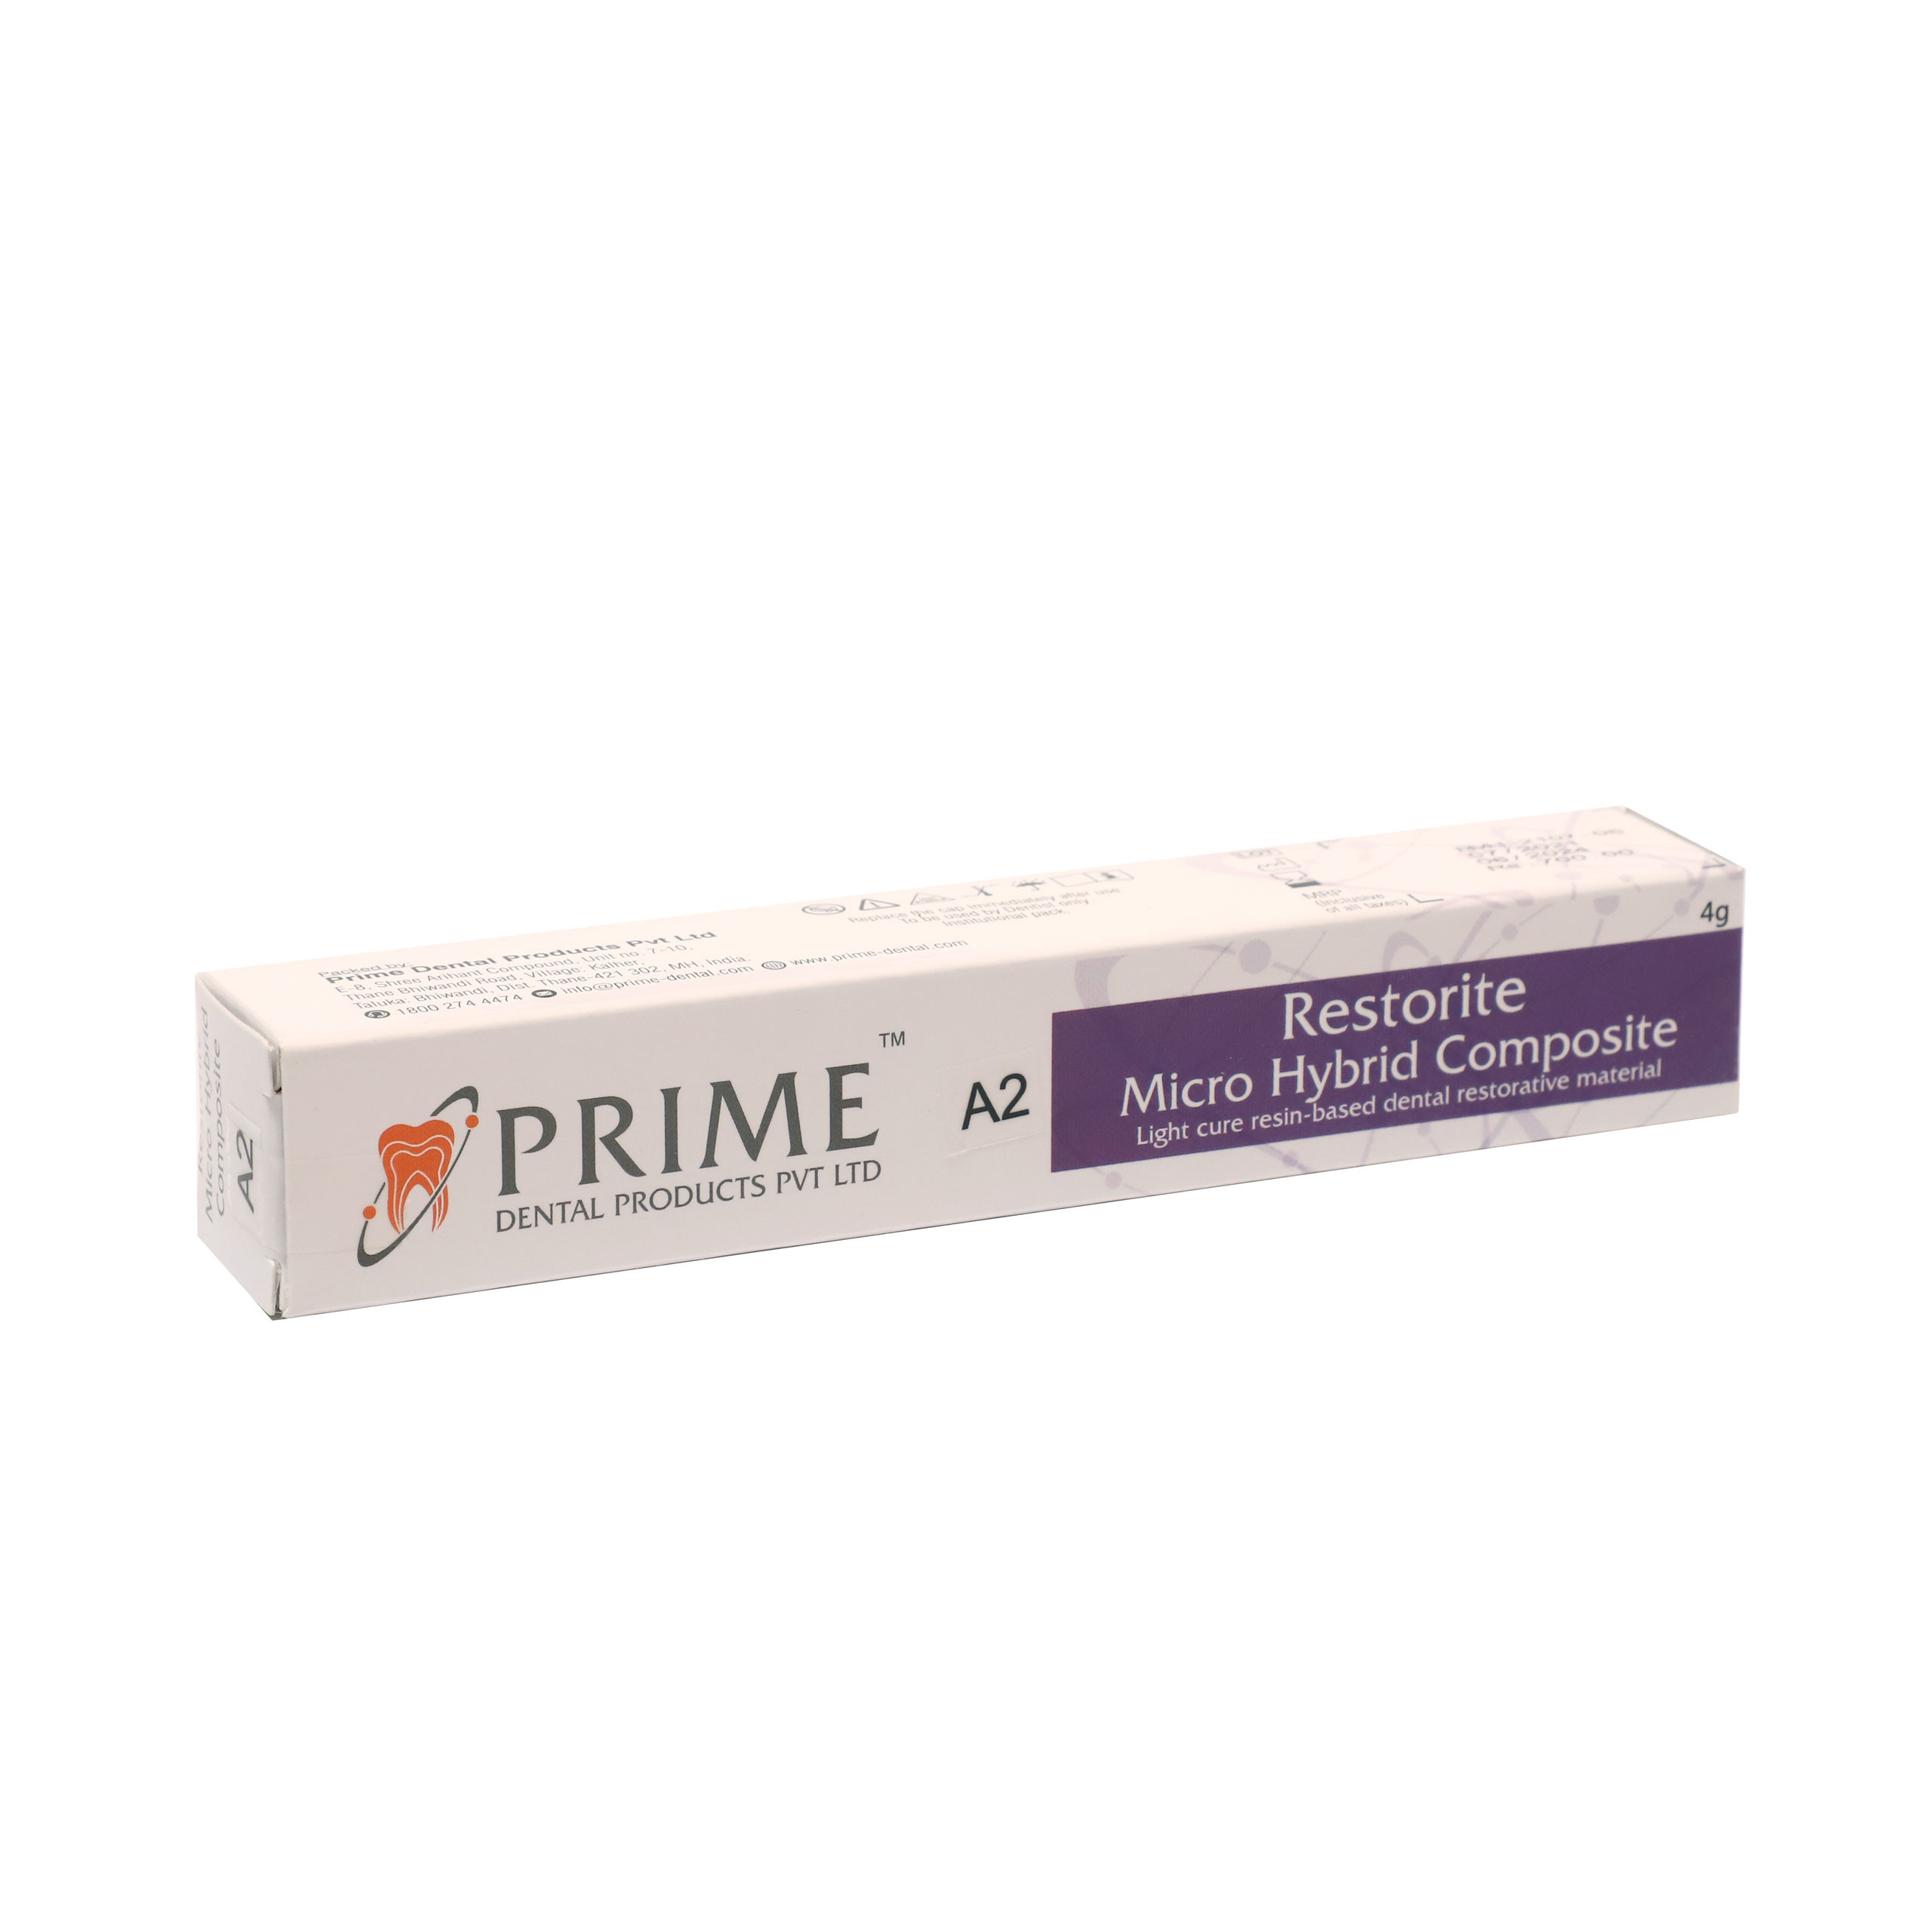 Prime Dental Restorite Micro Hybrid Composite A2